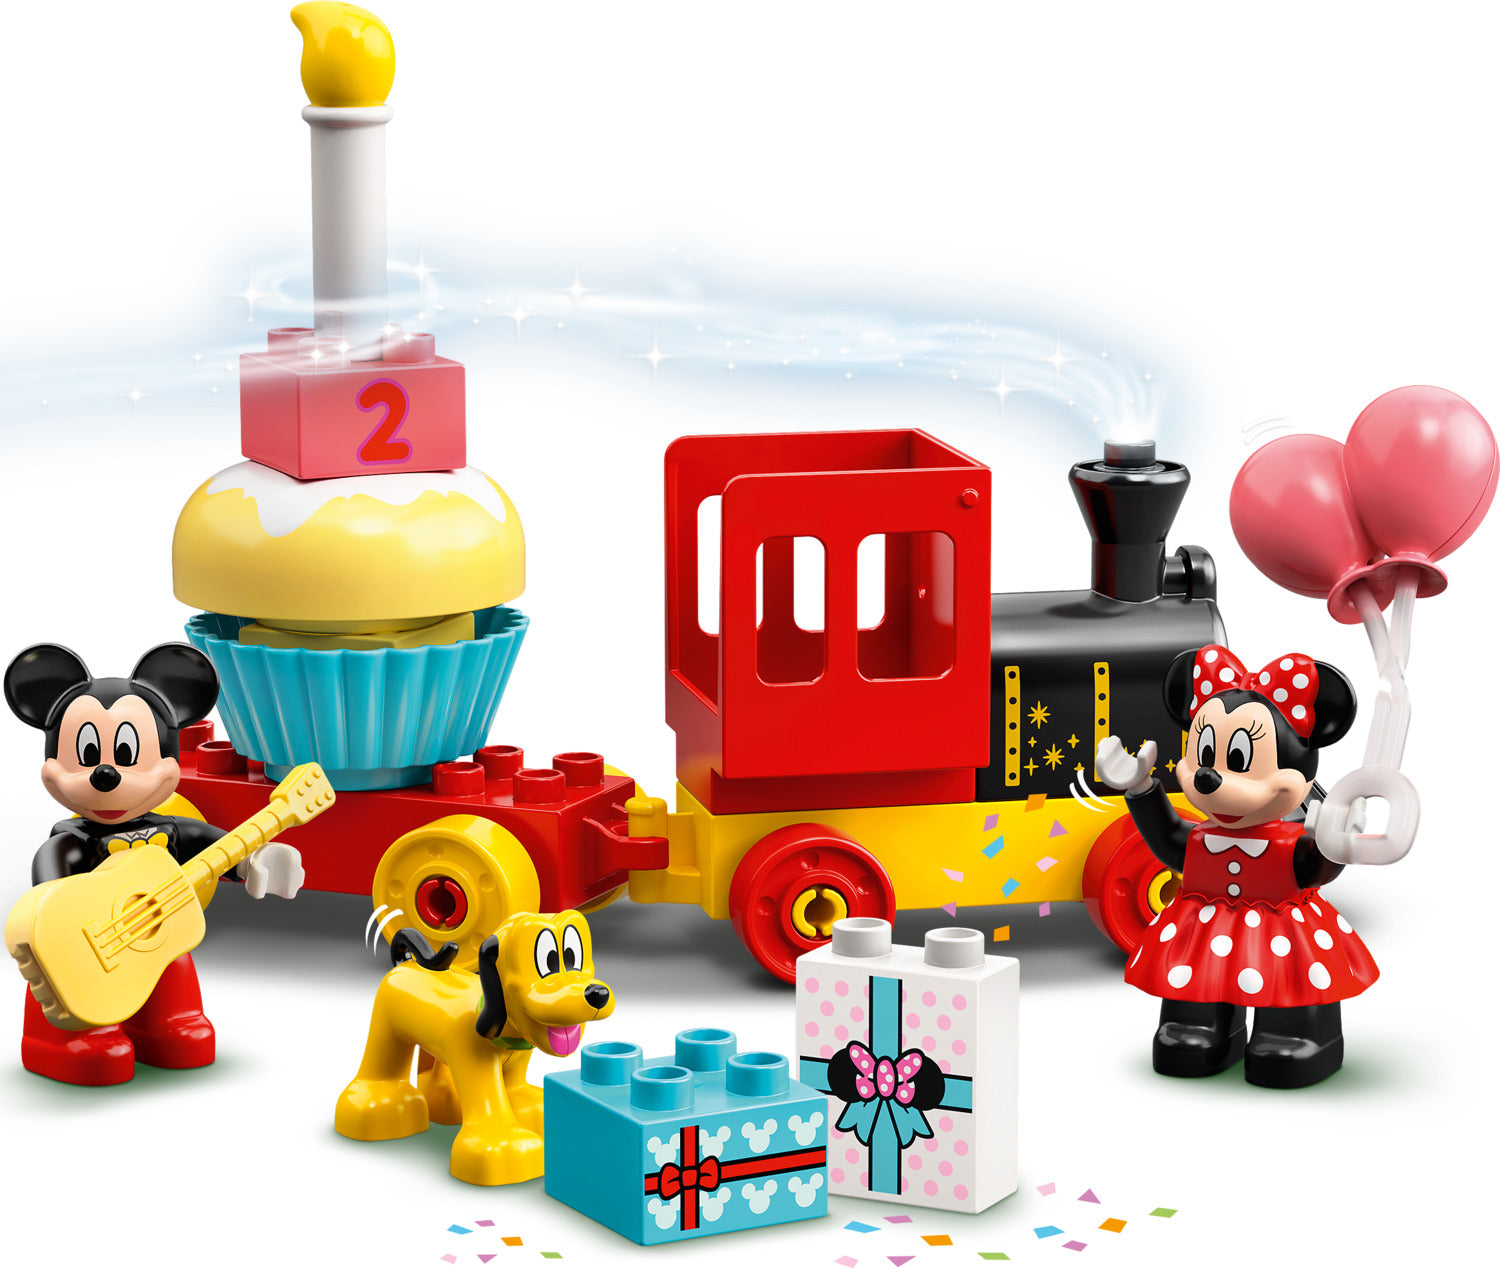 Mickey & Minnie Birthday Train 10941, DUPLO®